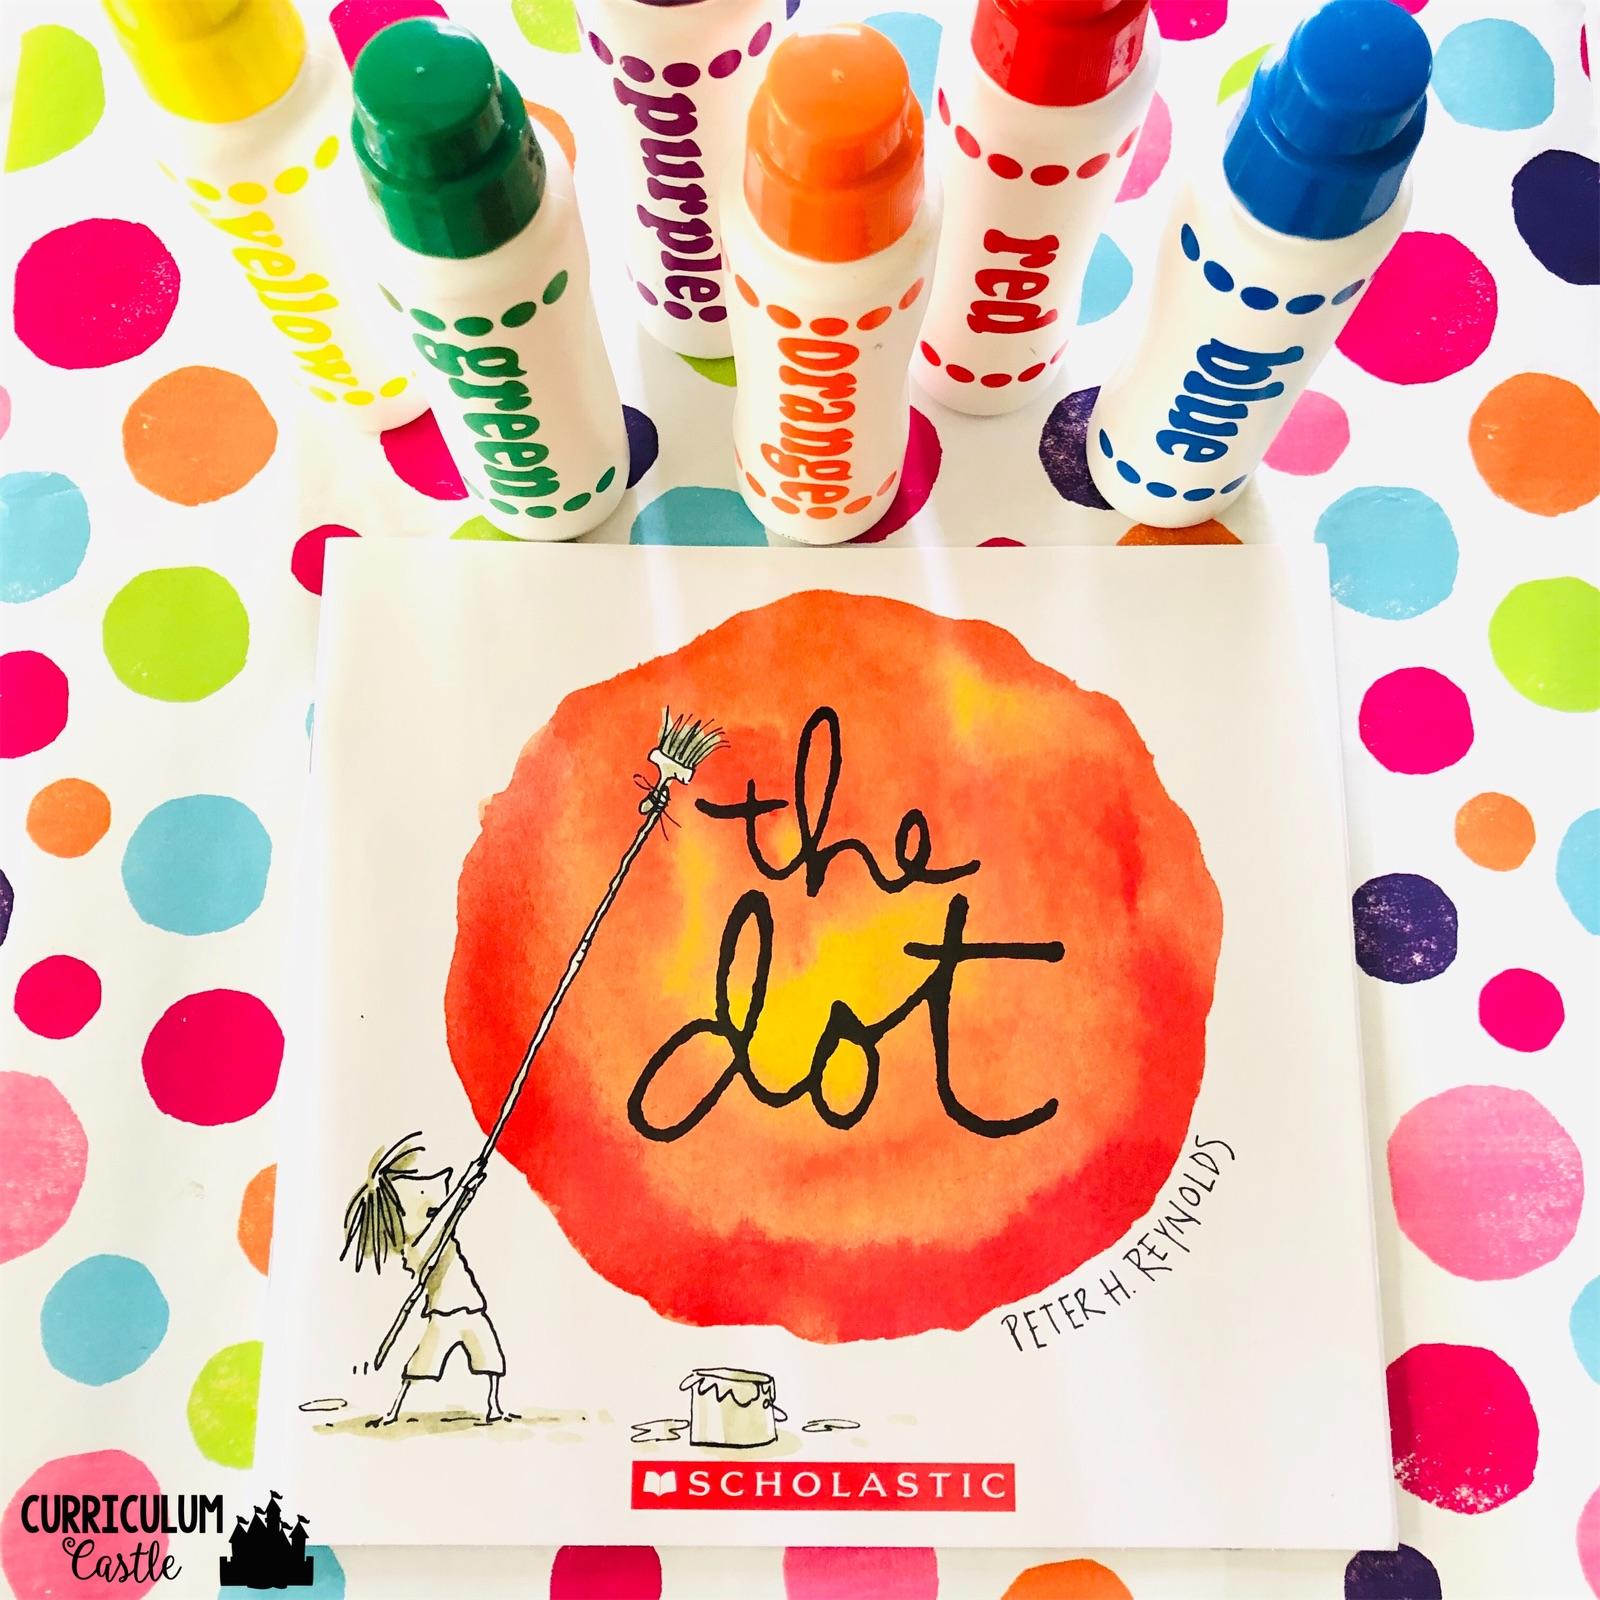 Easy Dot Day Art Activity Idea for Kids - CURRICULUM CASTLE